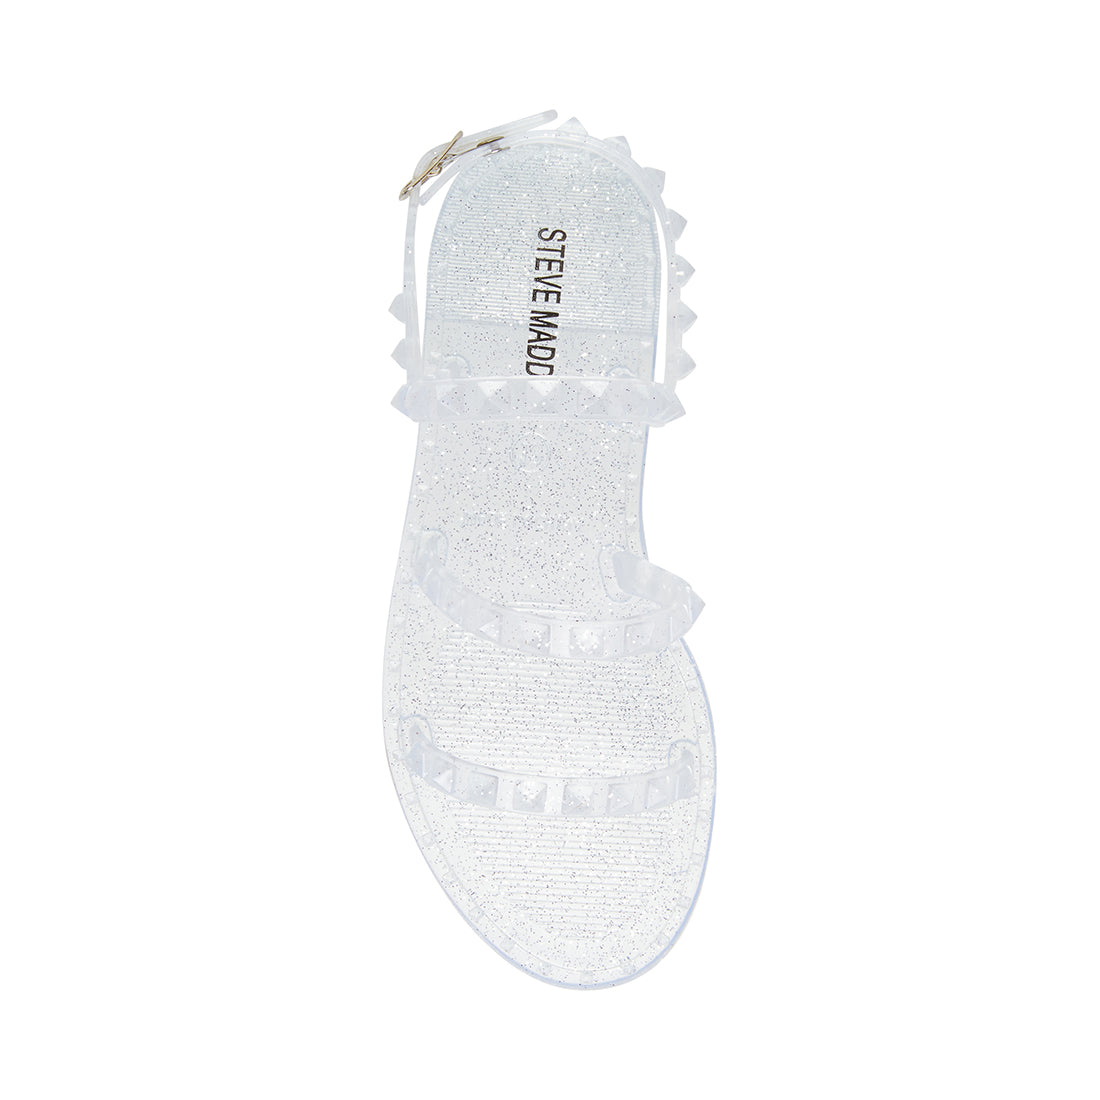 JTRAVELJ Silver Sandals | Women's Silver Designer Sandals – Steve Madden